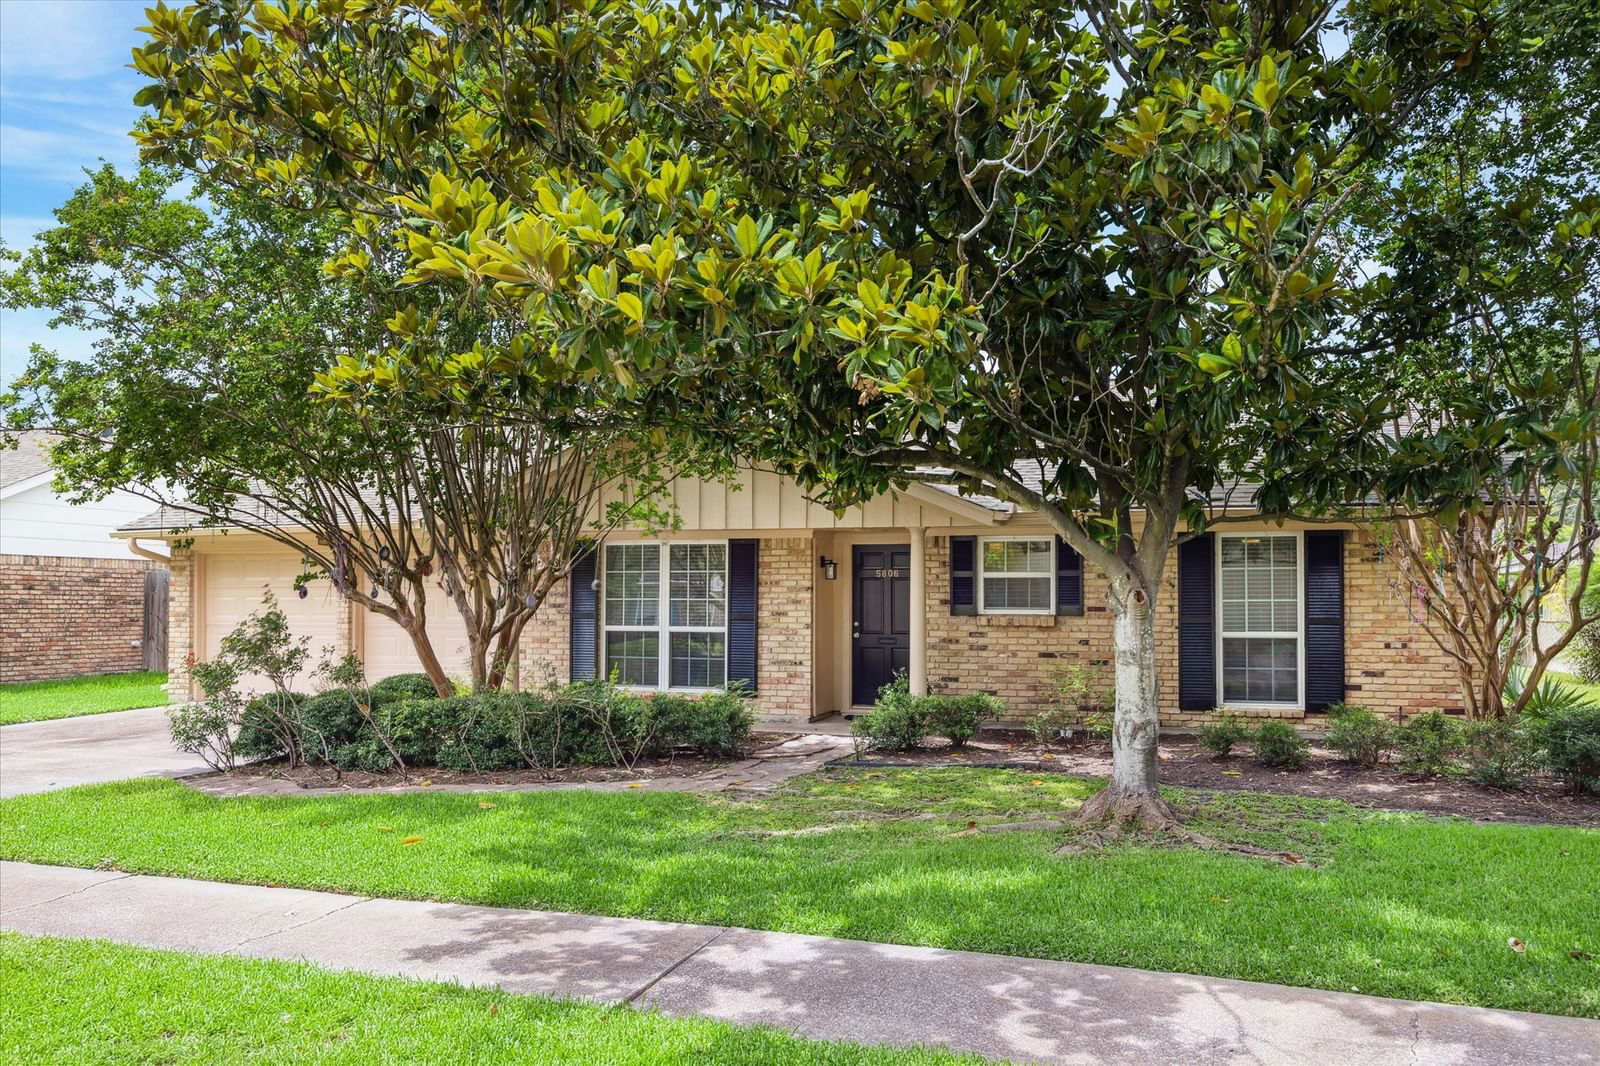 Real estate property located at 5806 Birdwood, Harris, Braeburn Terrace Sec 02 R/P, Houston, TX, US